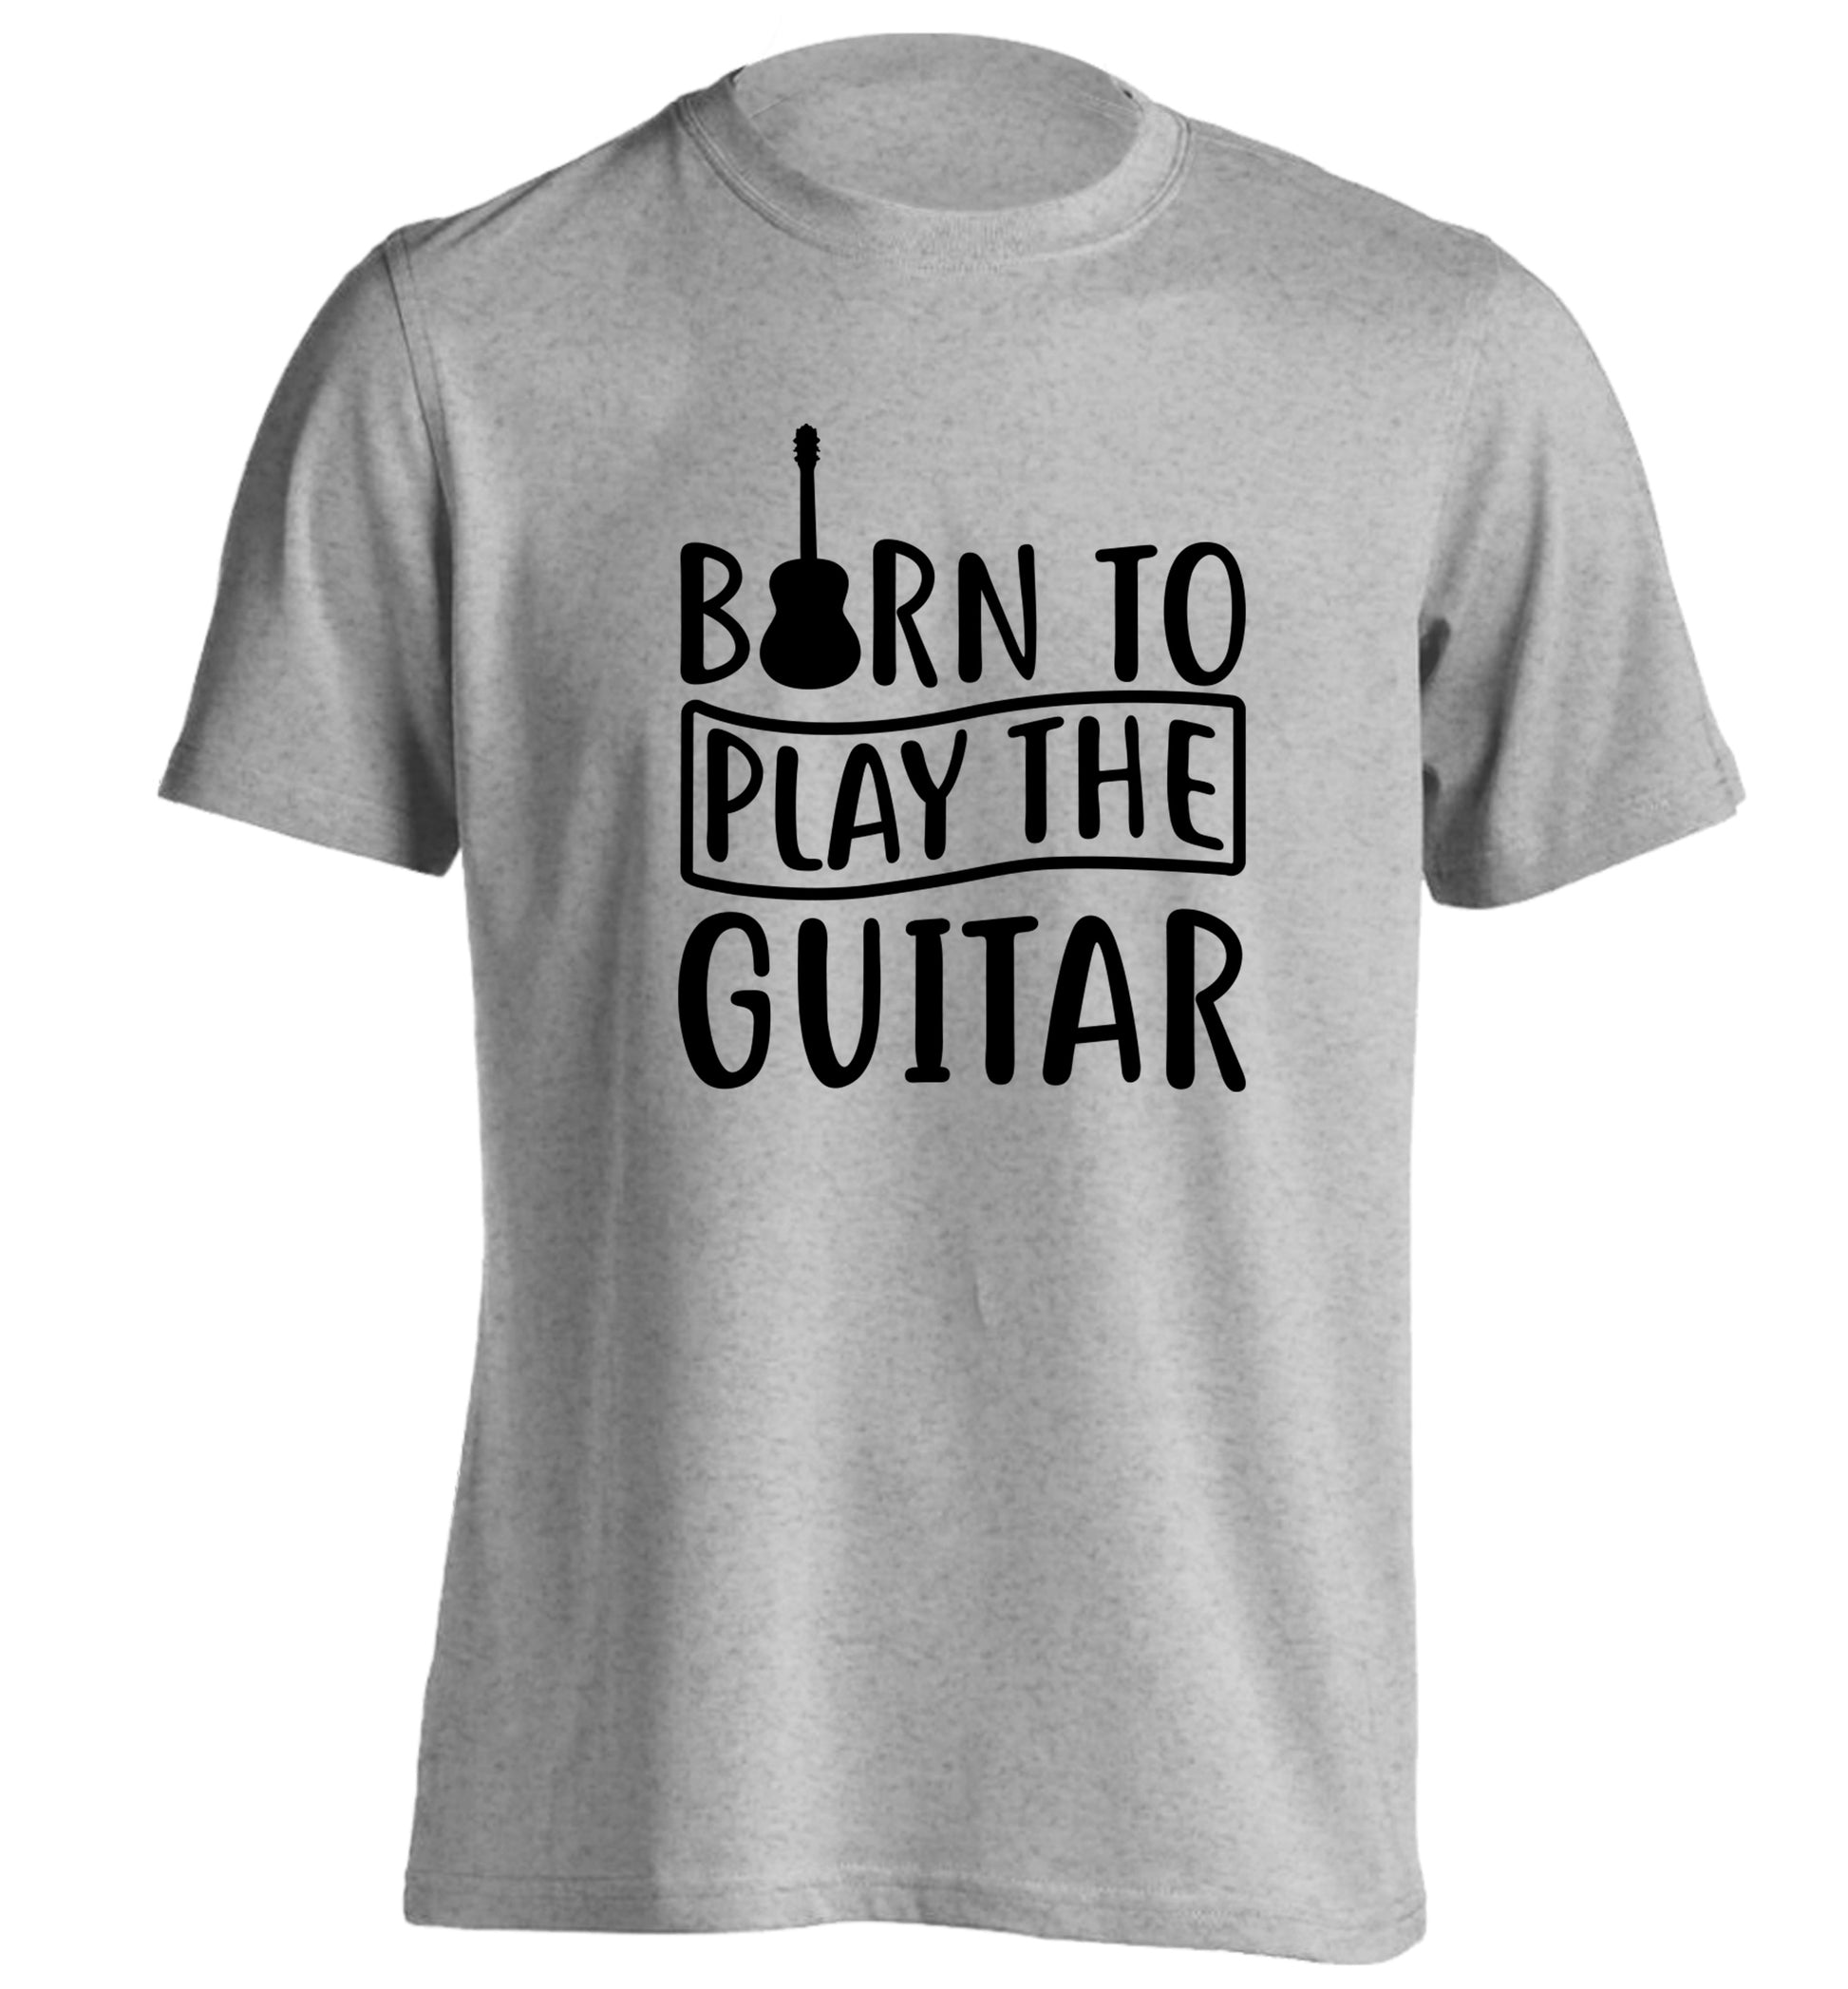 Born to play the guitar adults unisex grey Tshirt 2XL